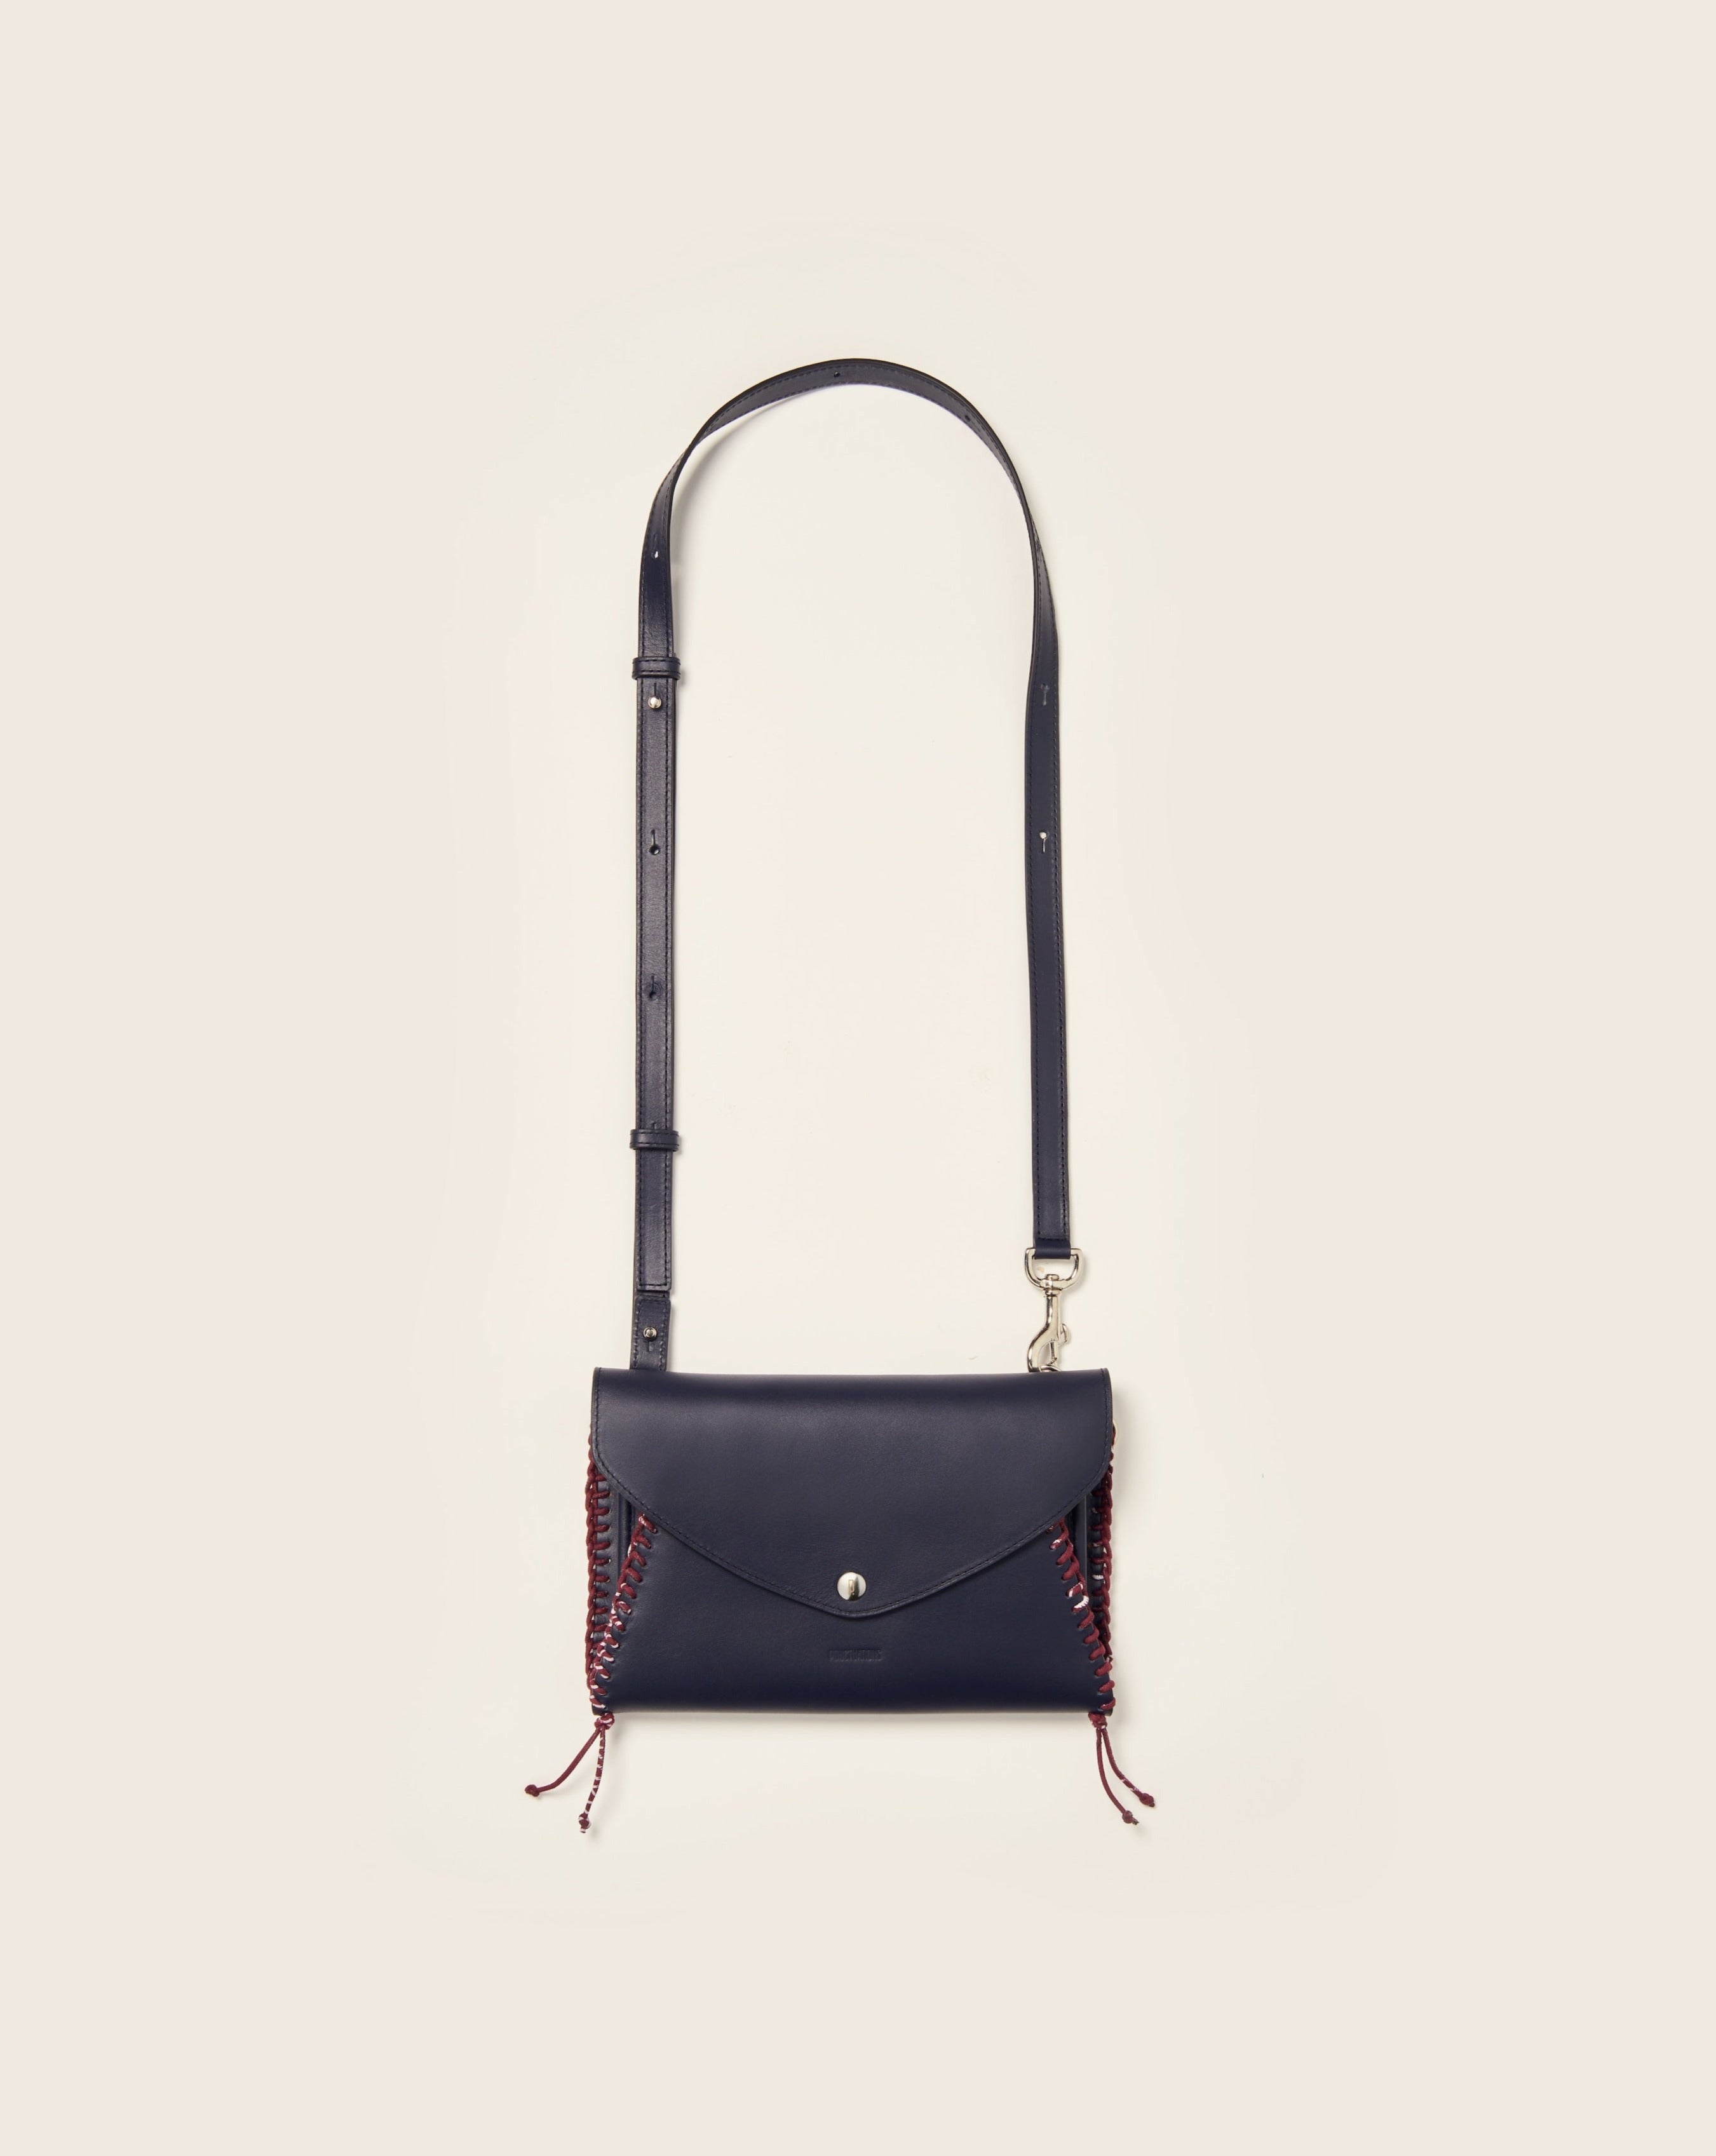 BATU - Envelope bag - Navy leather & Bandana burgundy